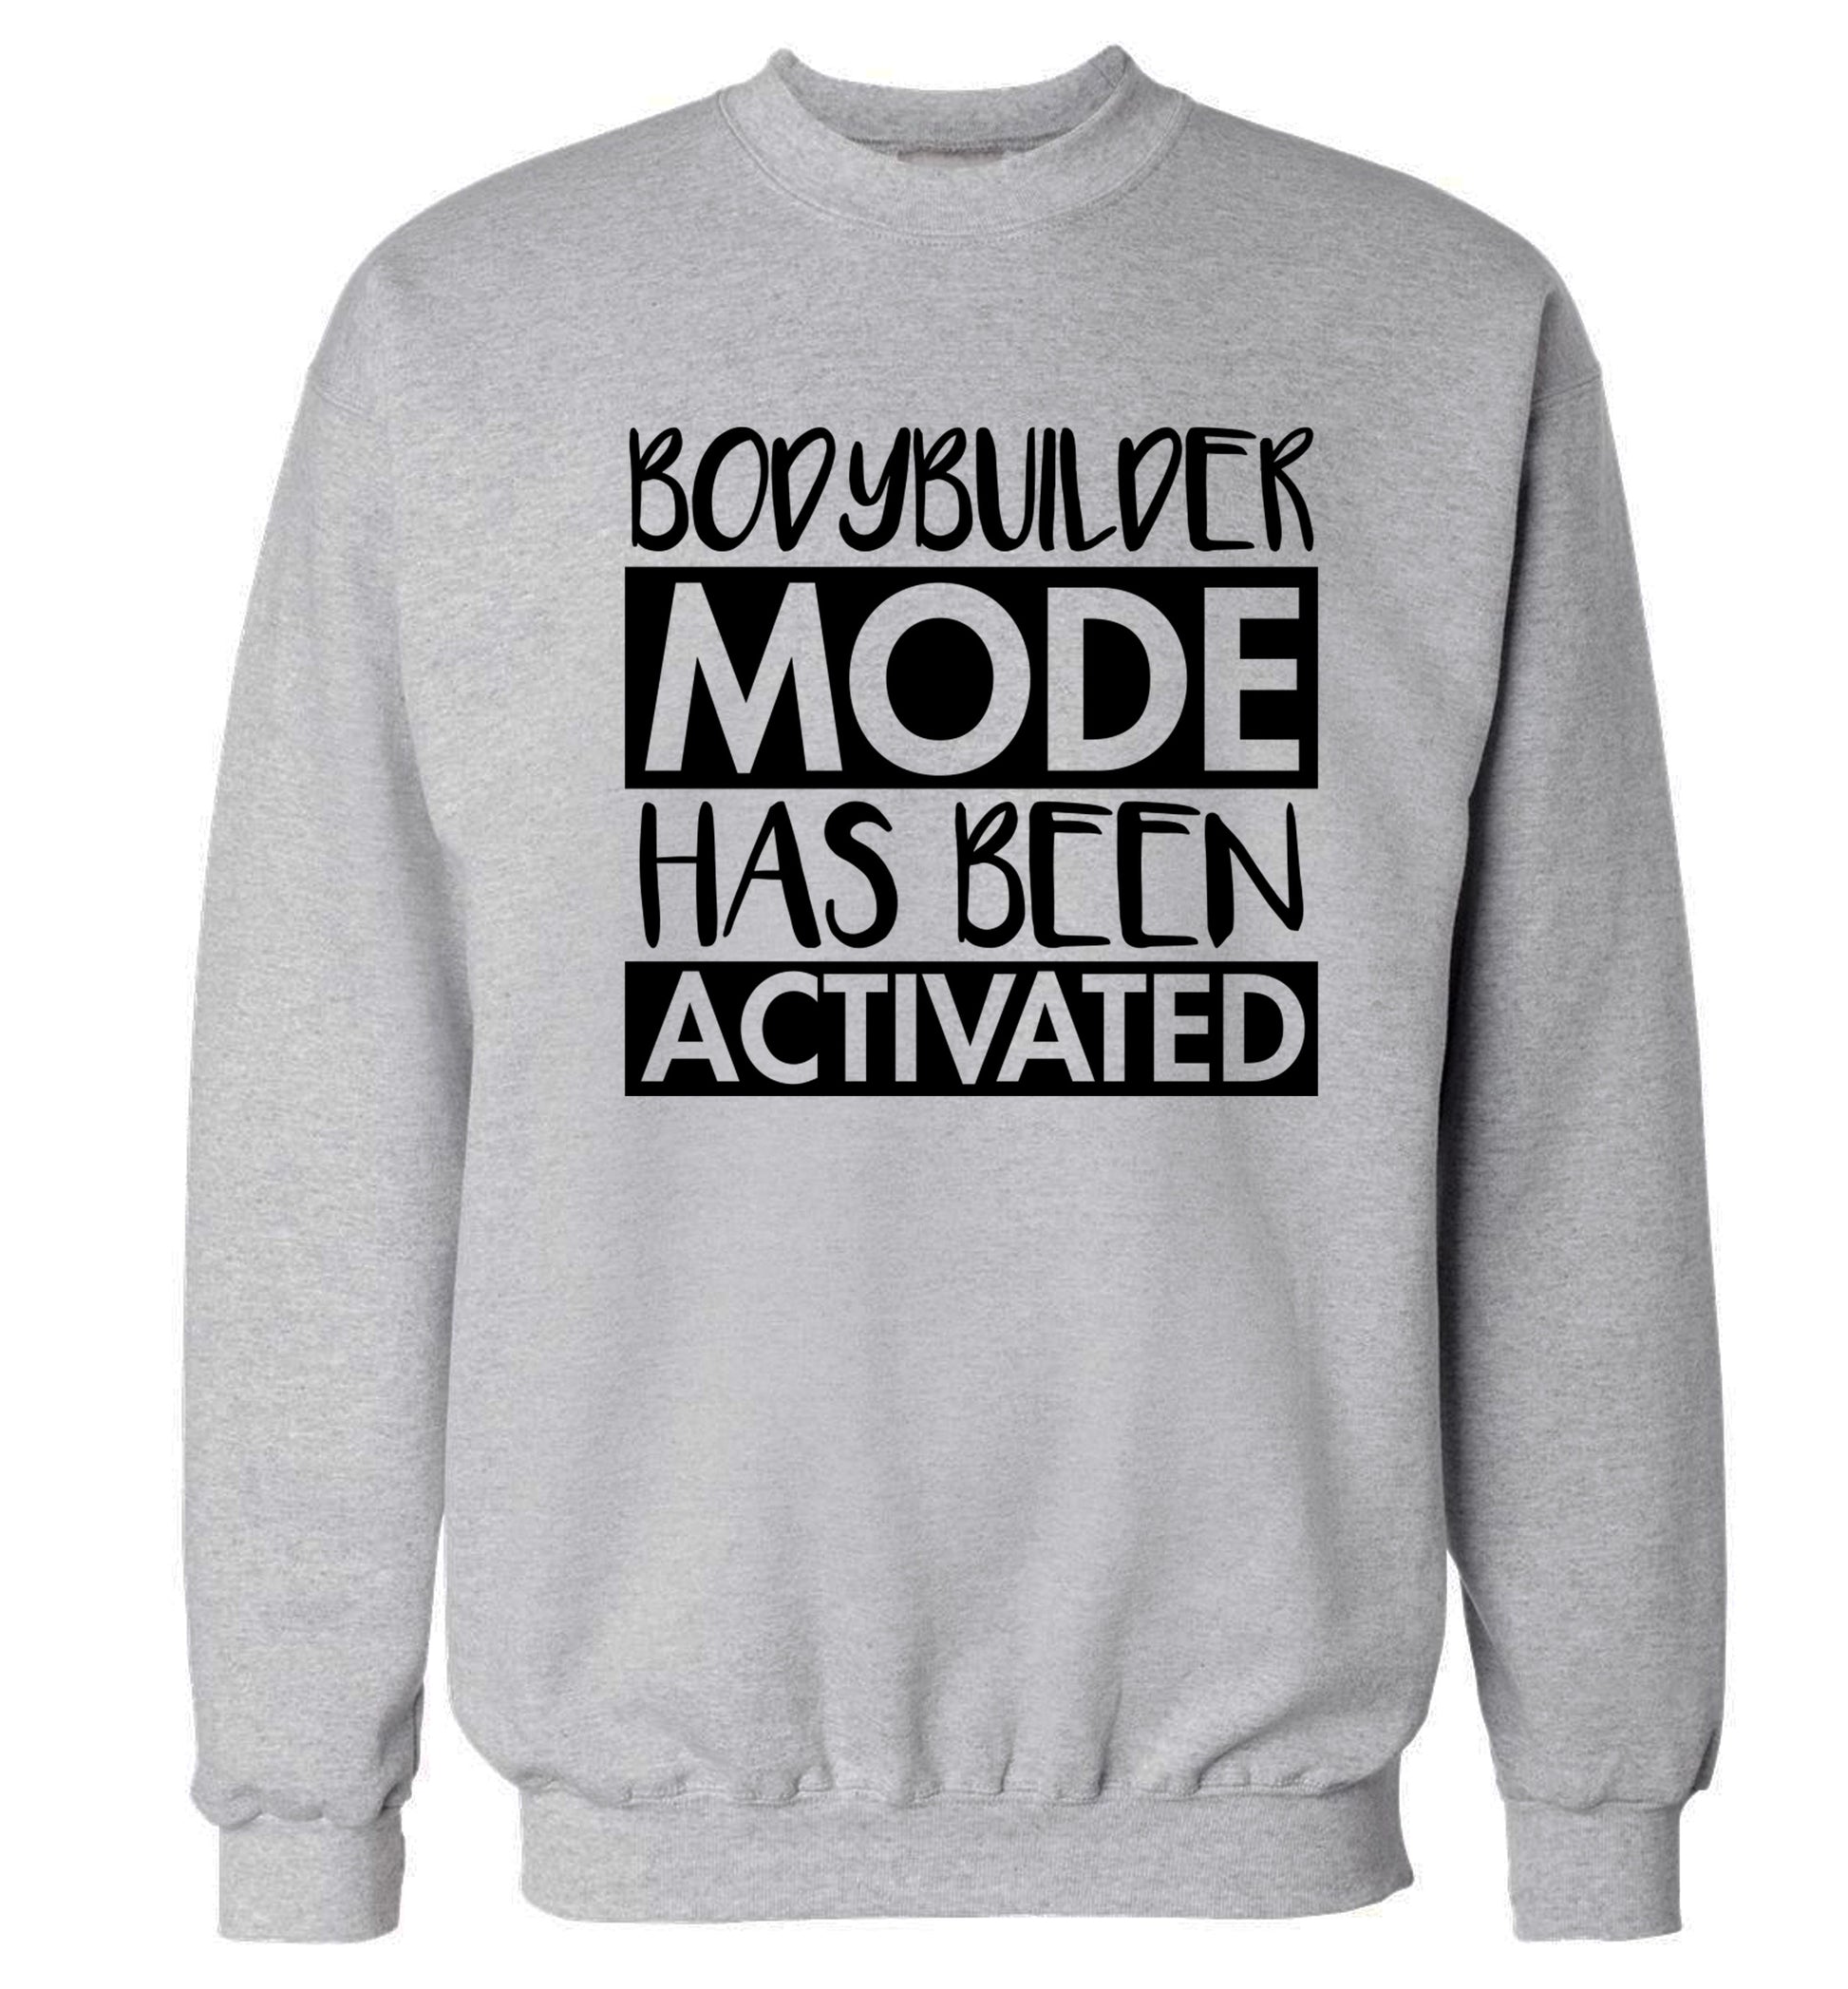 Bodybuilder mode activated Adult's unisex grey Sweater 2XL